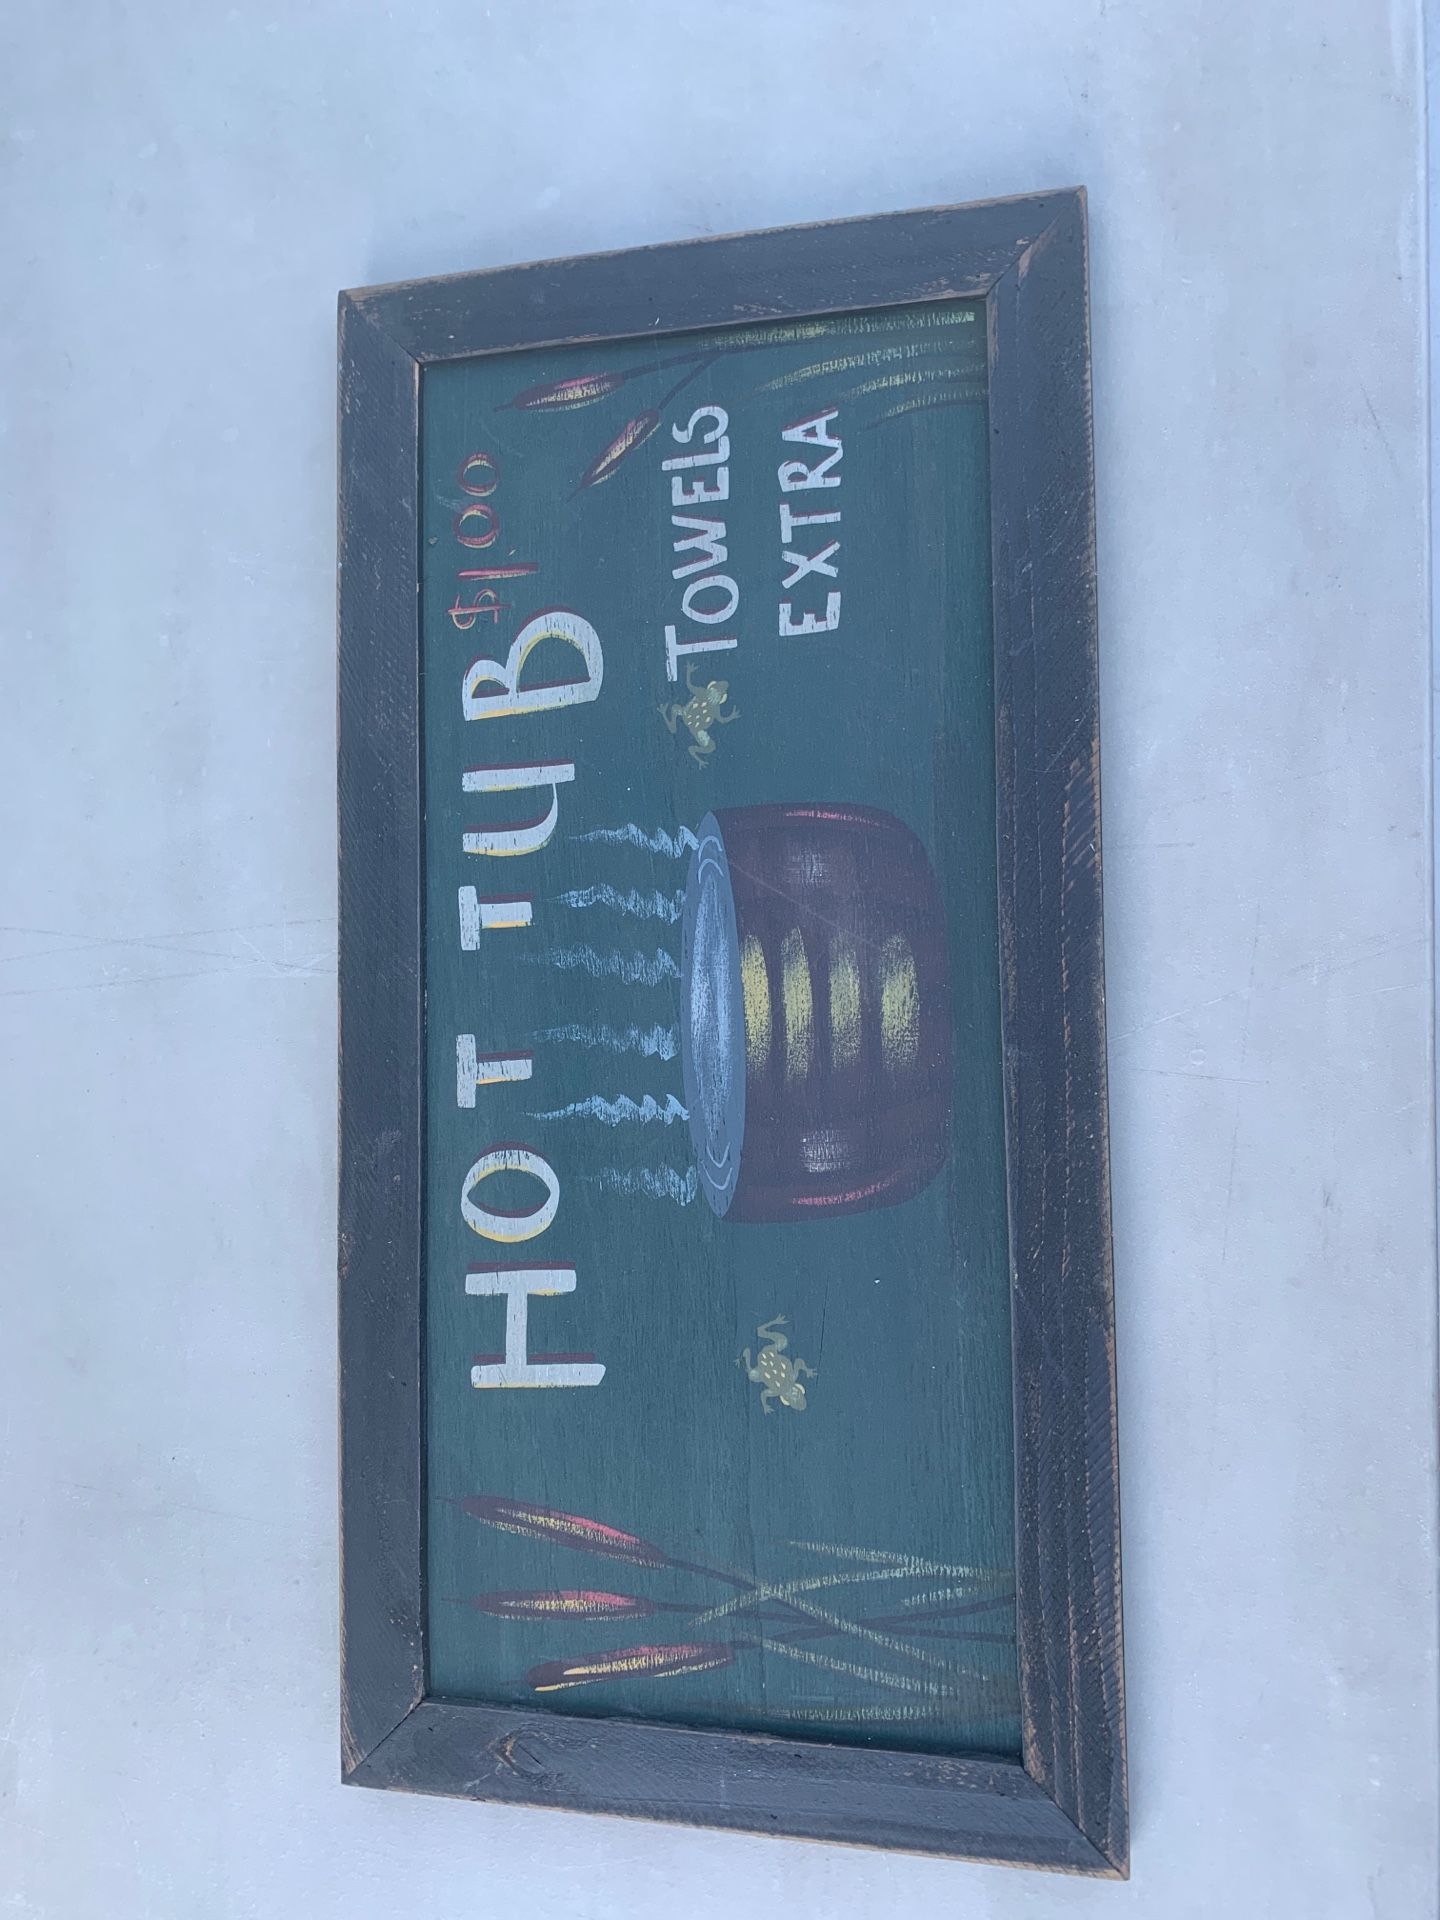 Hot tub sign